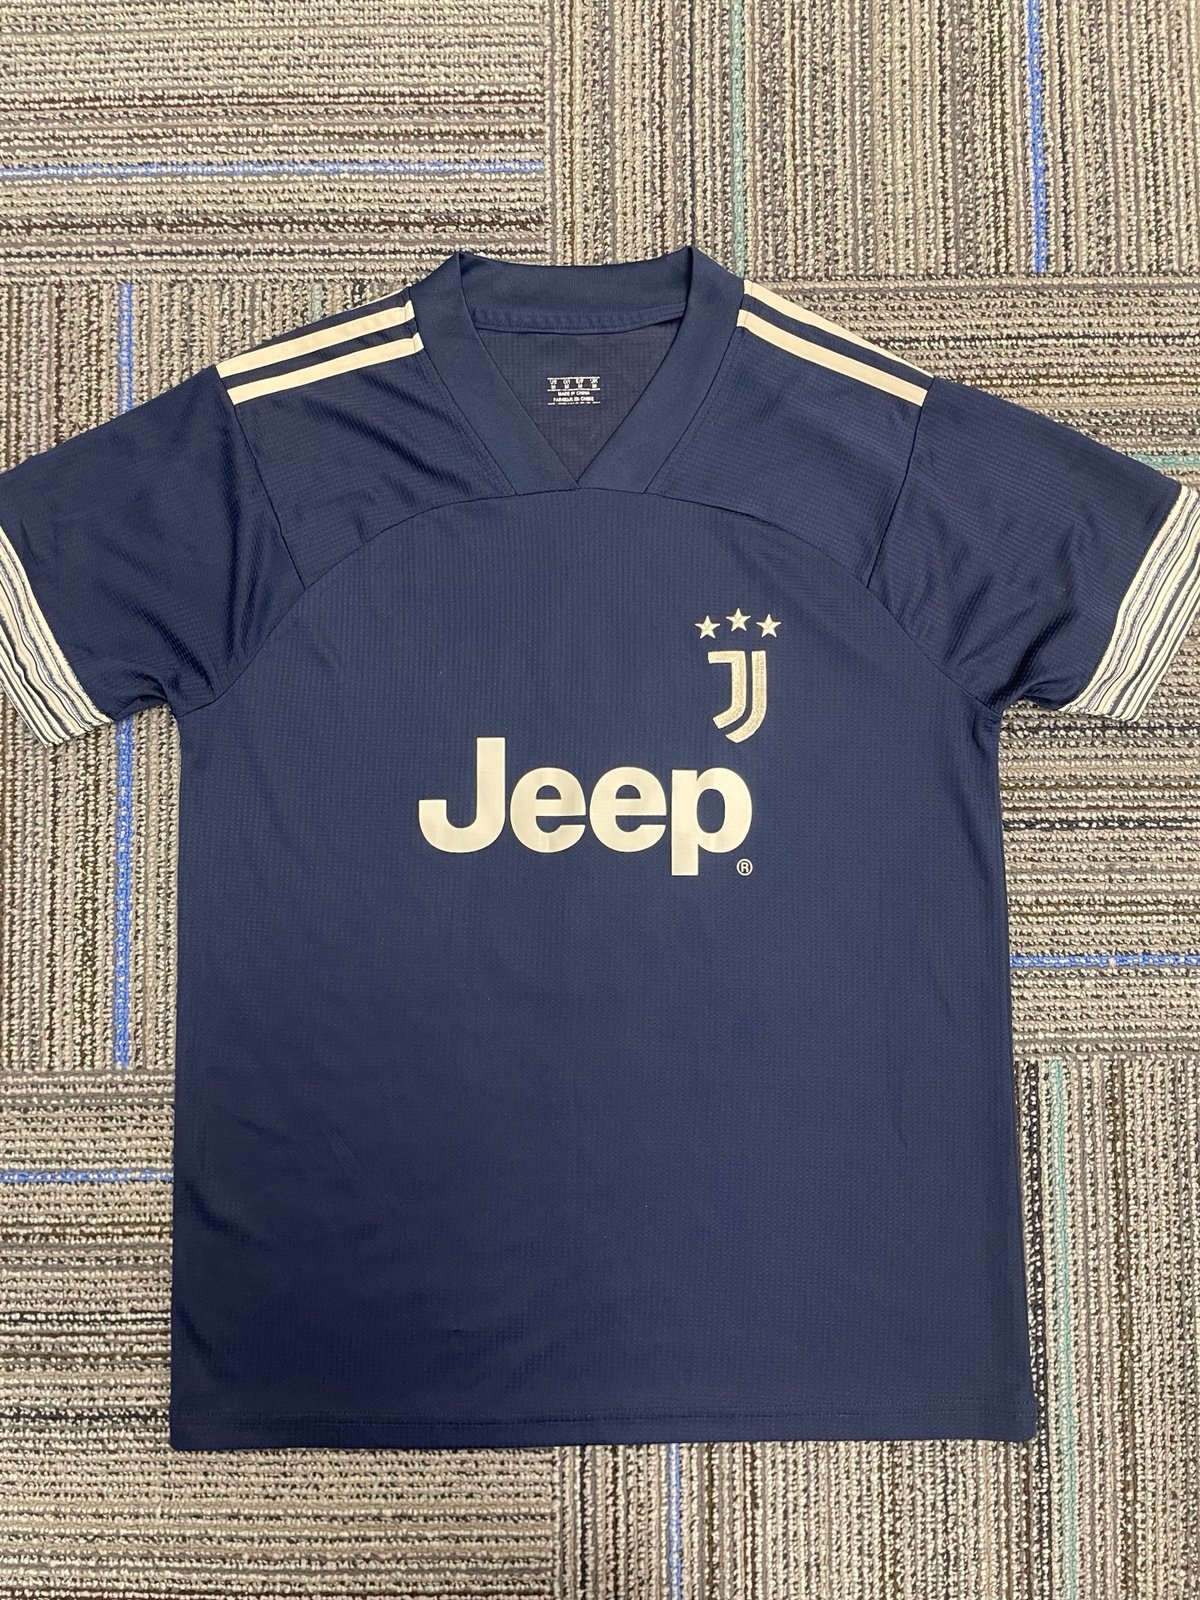 Adidas Juventus 2020-21 Navy Blue Away Soccer Jersey Men Medium New #5 Locatelli mGtOJoCxM